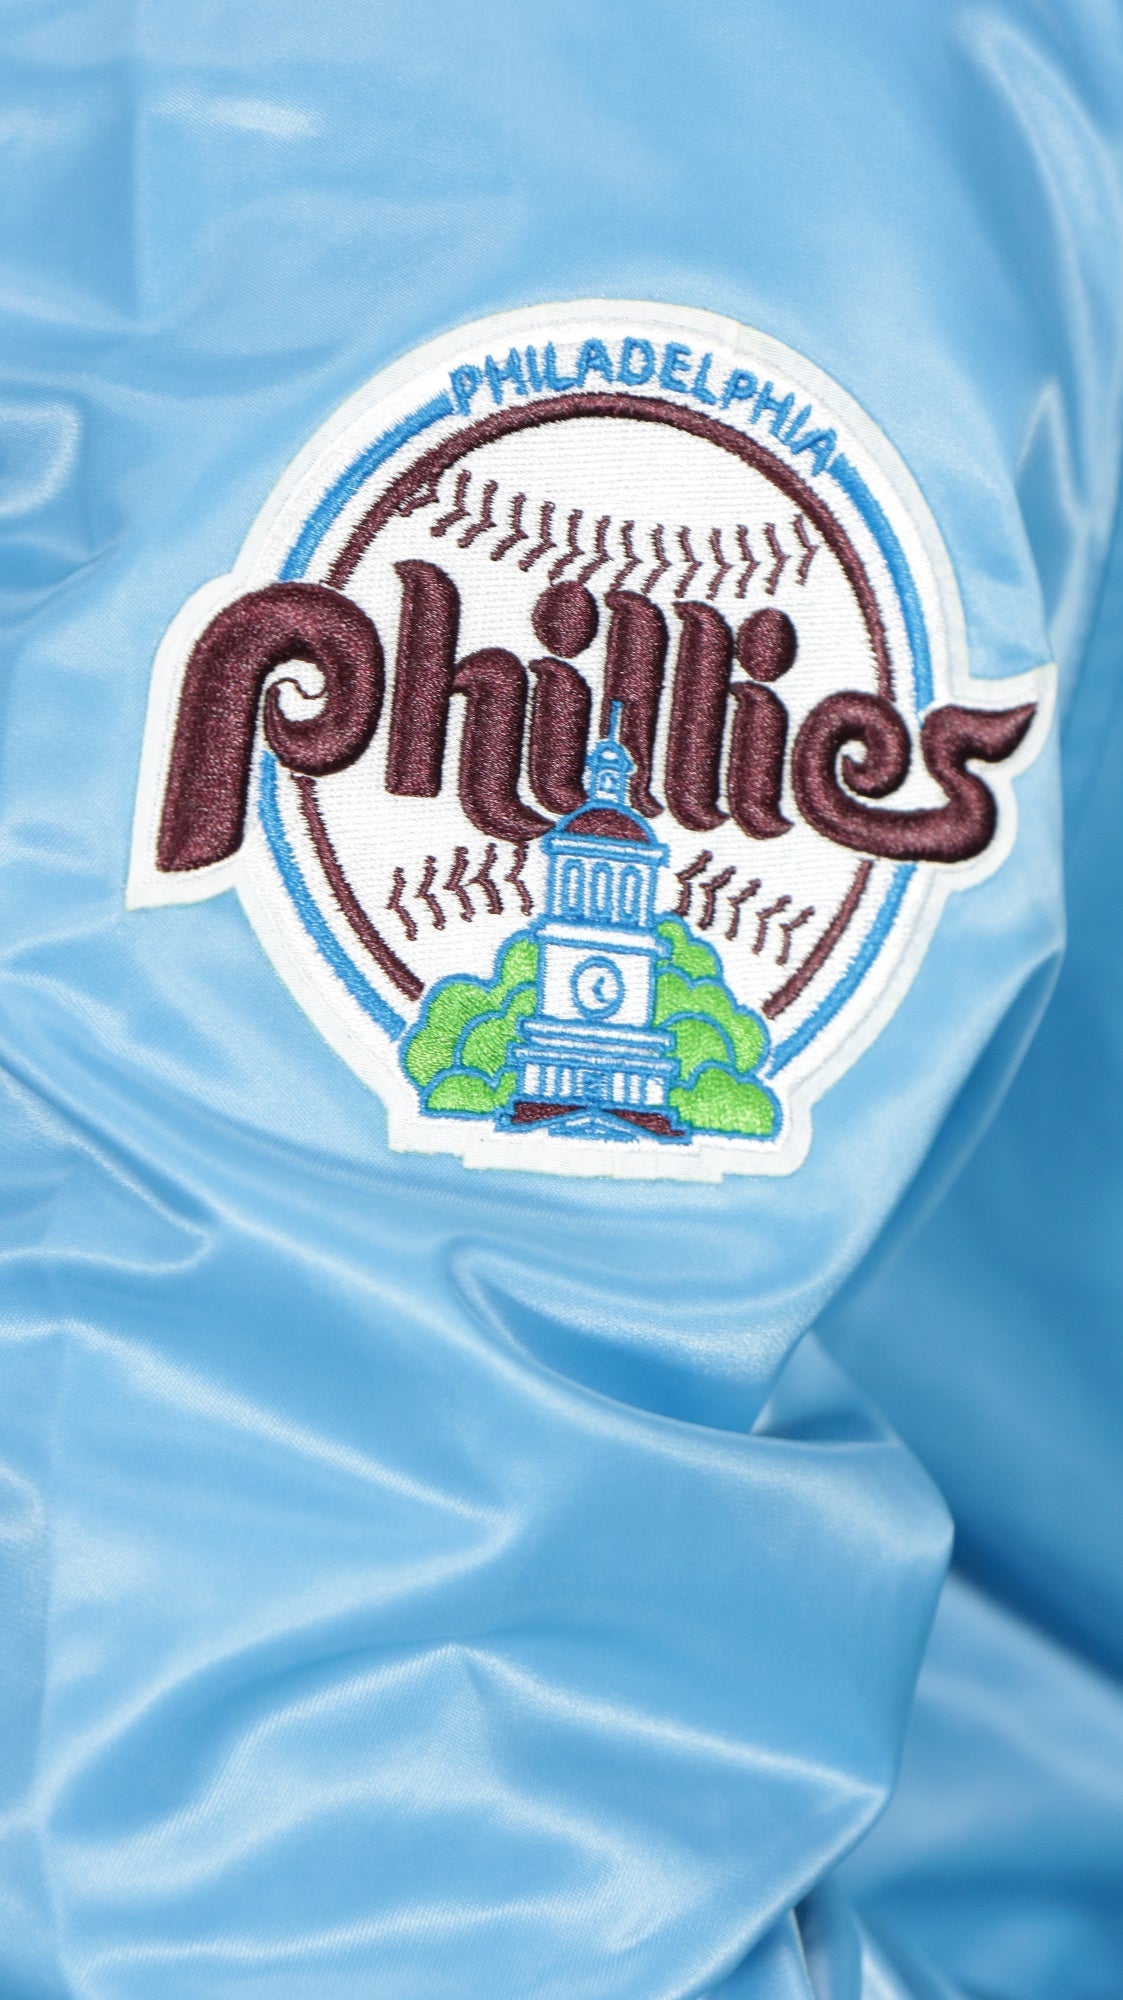 phillies city hall logo on the Philadelphia Phillies Cooperstown Phillies City Hall Logo 1980 World Series Patch Retro Classic Rib | University Blue Satin Varsity Jacket